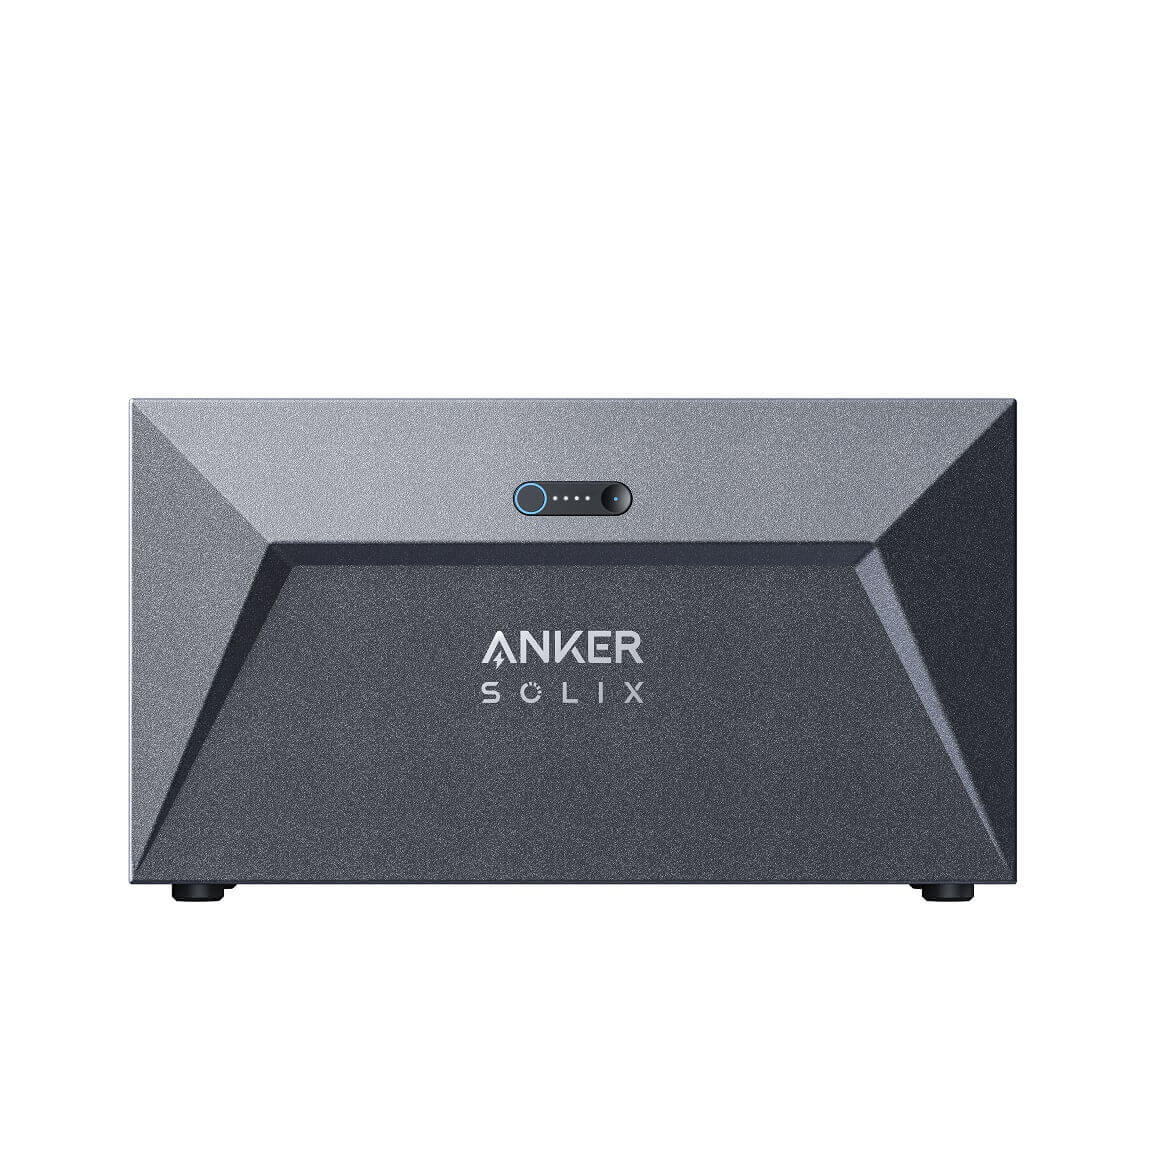 Anker SOLIX Solarbank E1600 + MI80 (BLE) Microinverter (800W) - Schwarz